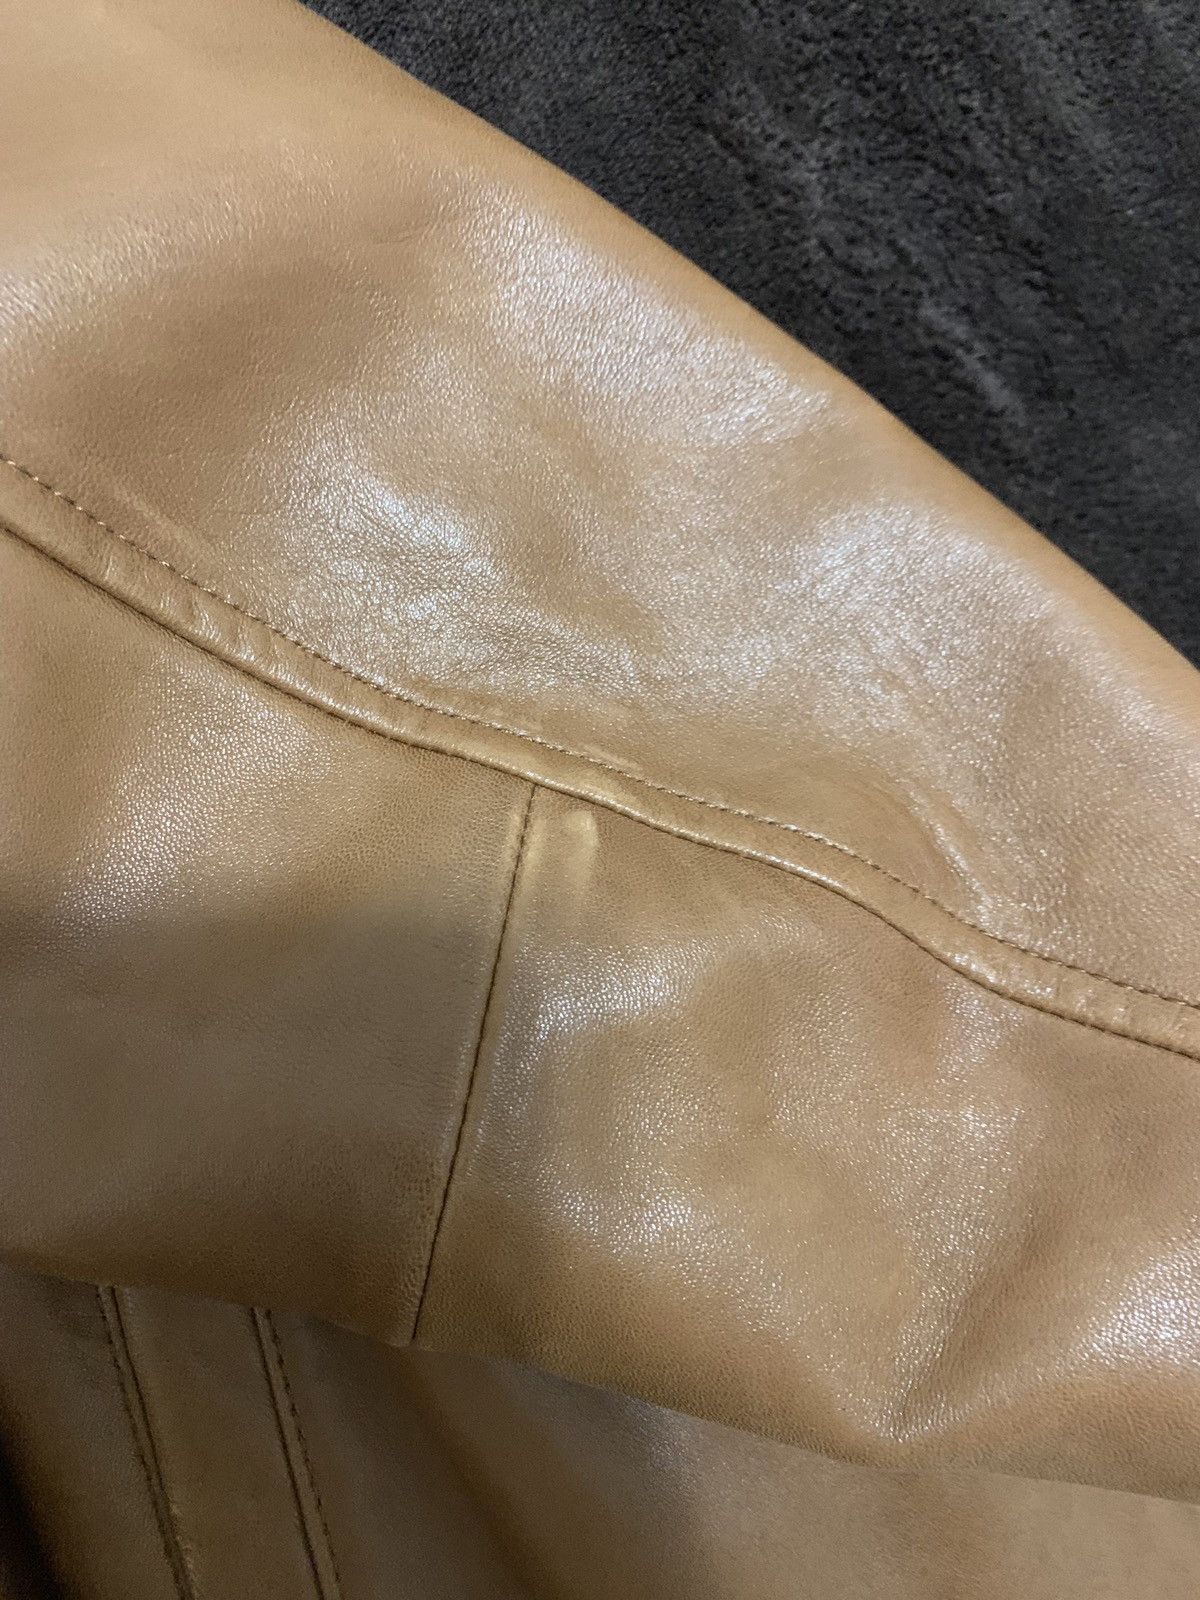 Vintage Vintage Nautica Leather Jacket Size US L / EU 52-54 / 3 - 13 Thumbnail